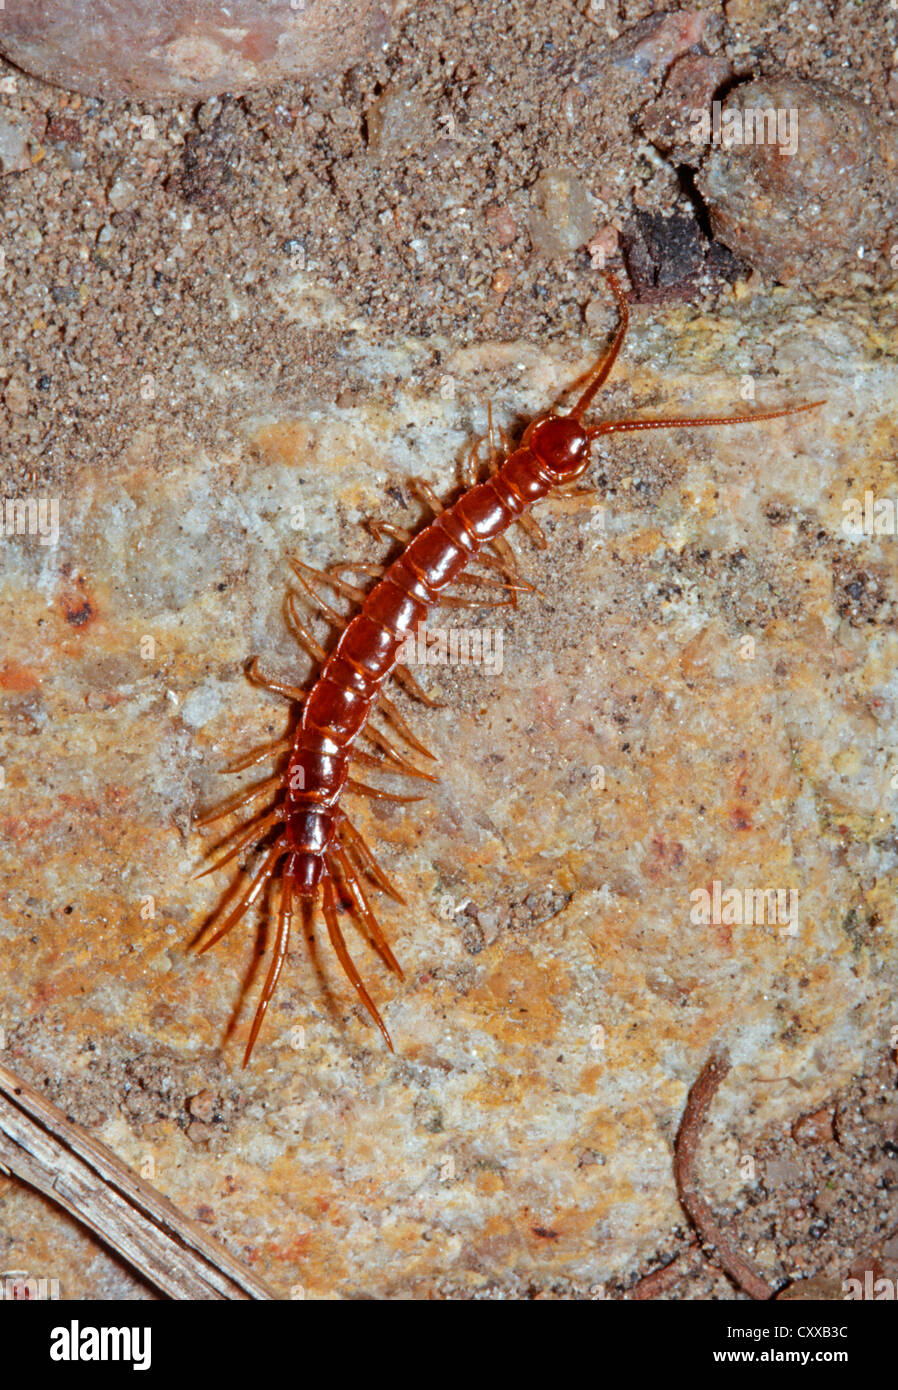 Centipede crawling on sandy soil, Lakewood Colorado US. Stock Photo